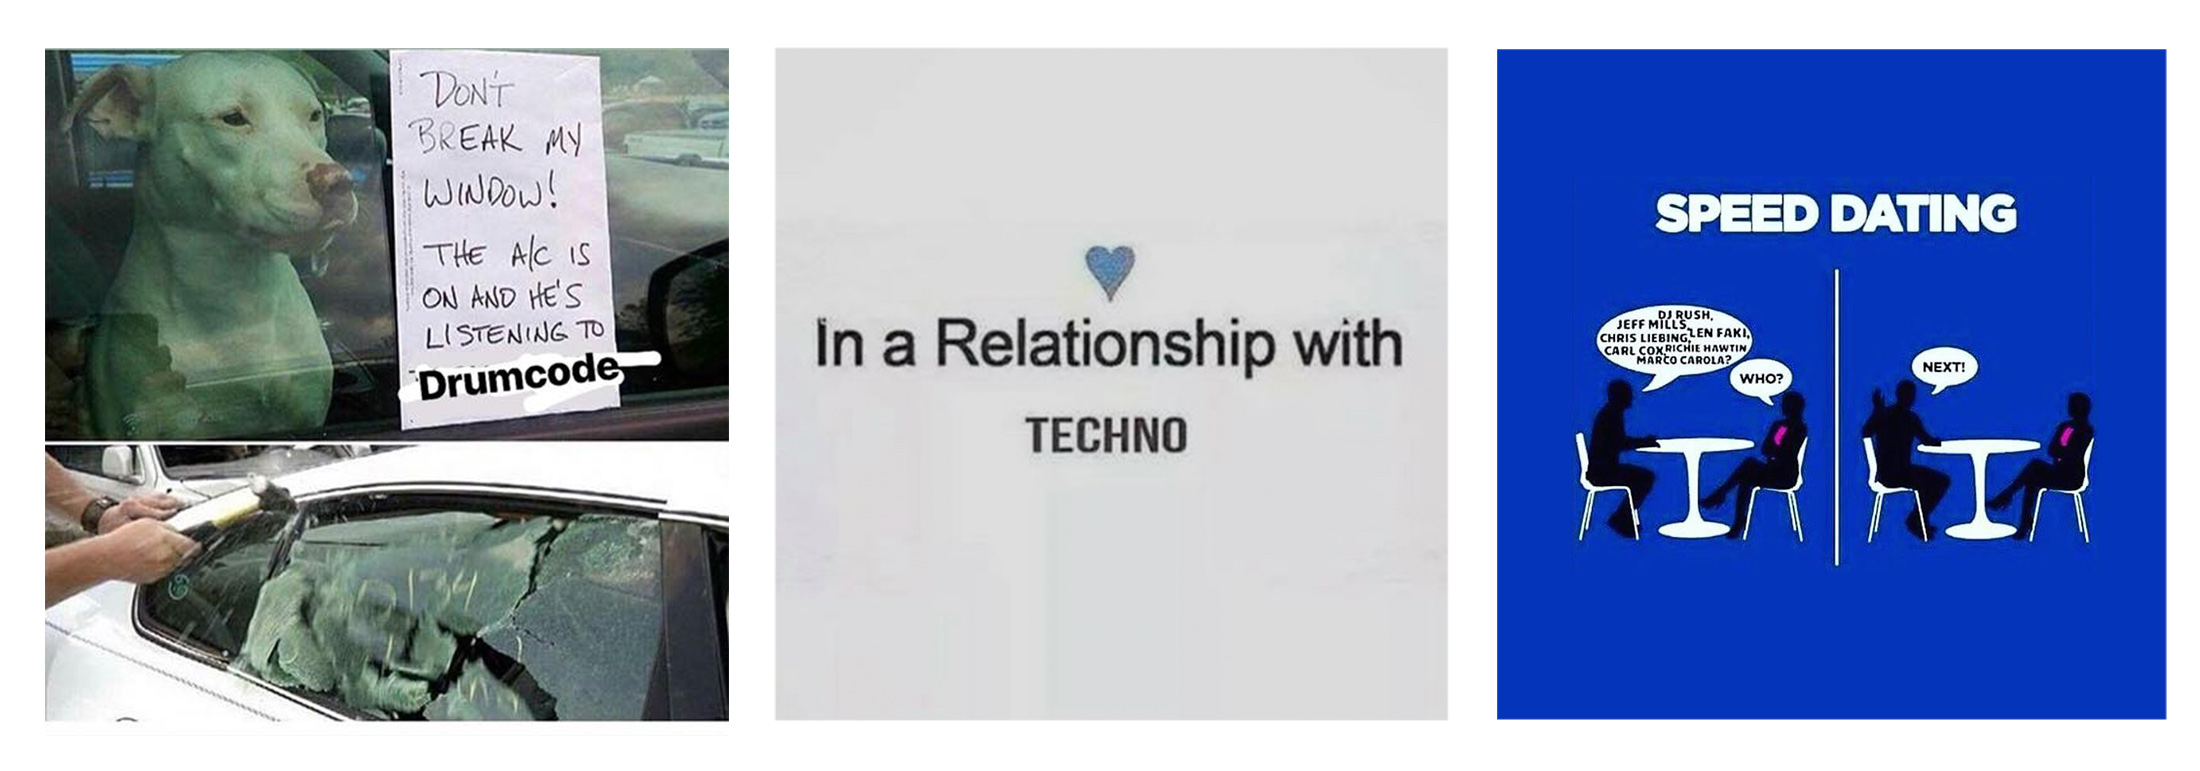 Techno dating website